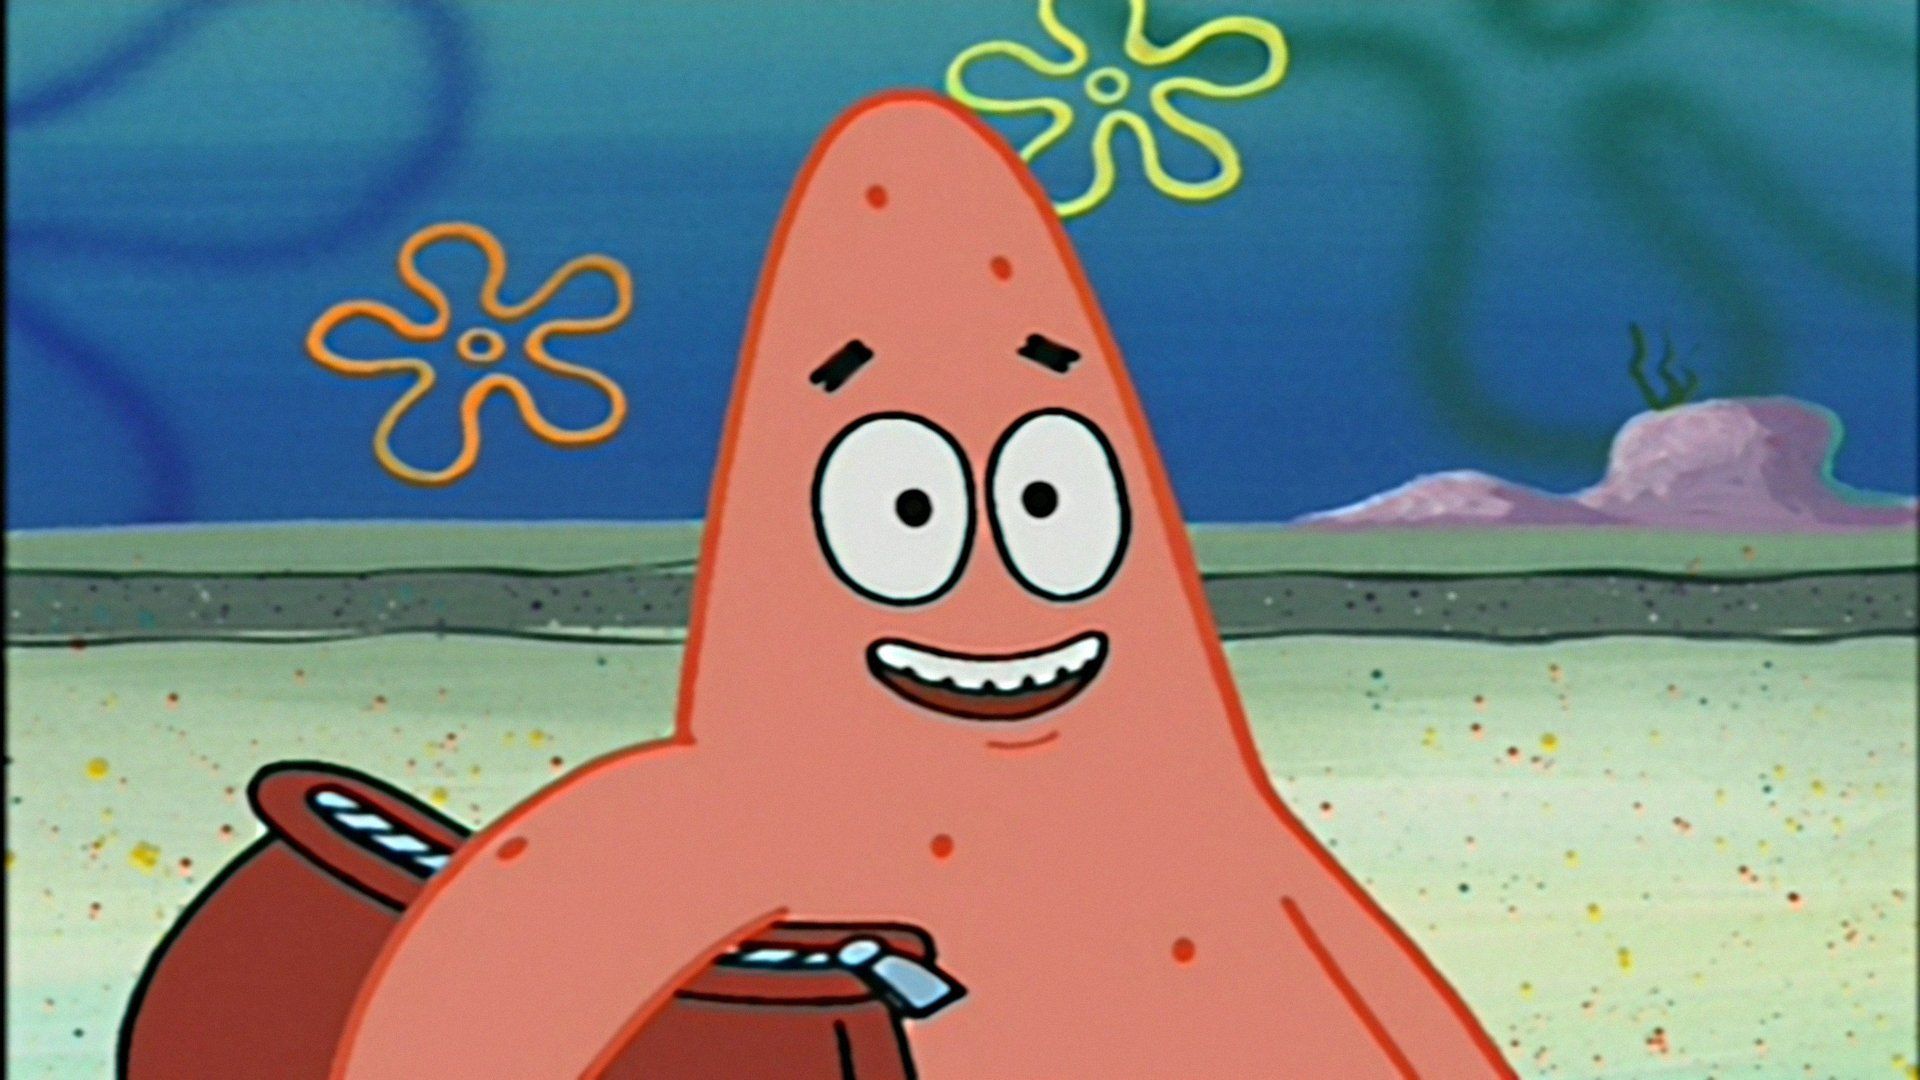 Patrick Star smiling and holding a chocolate bag in Spongebob Squarepants